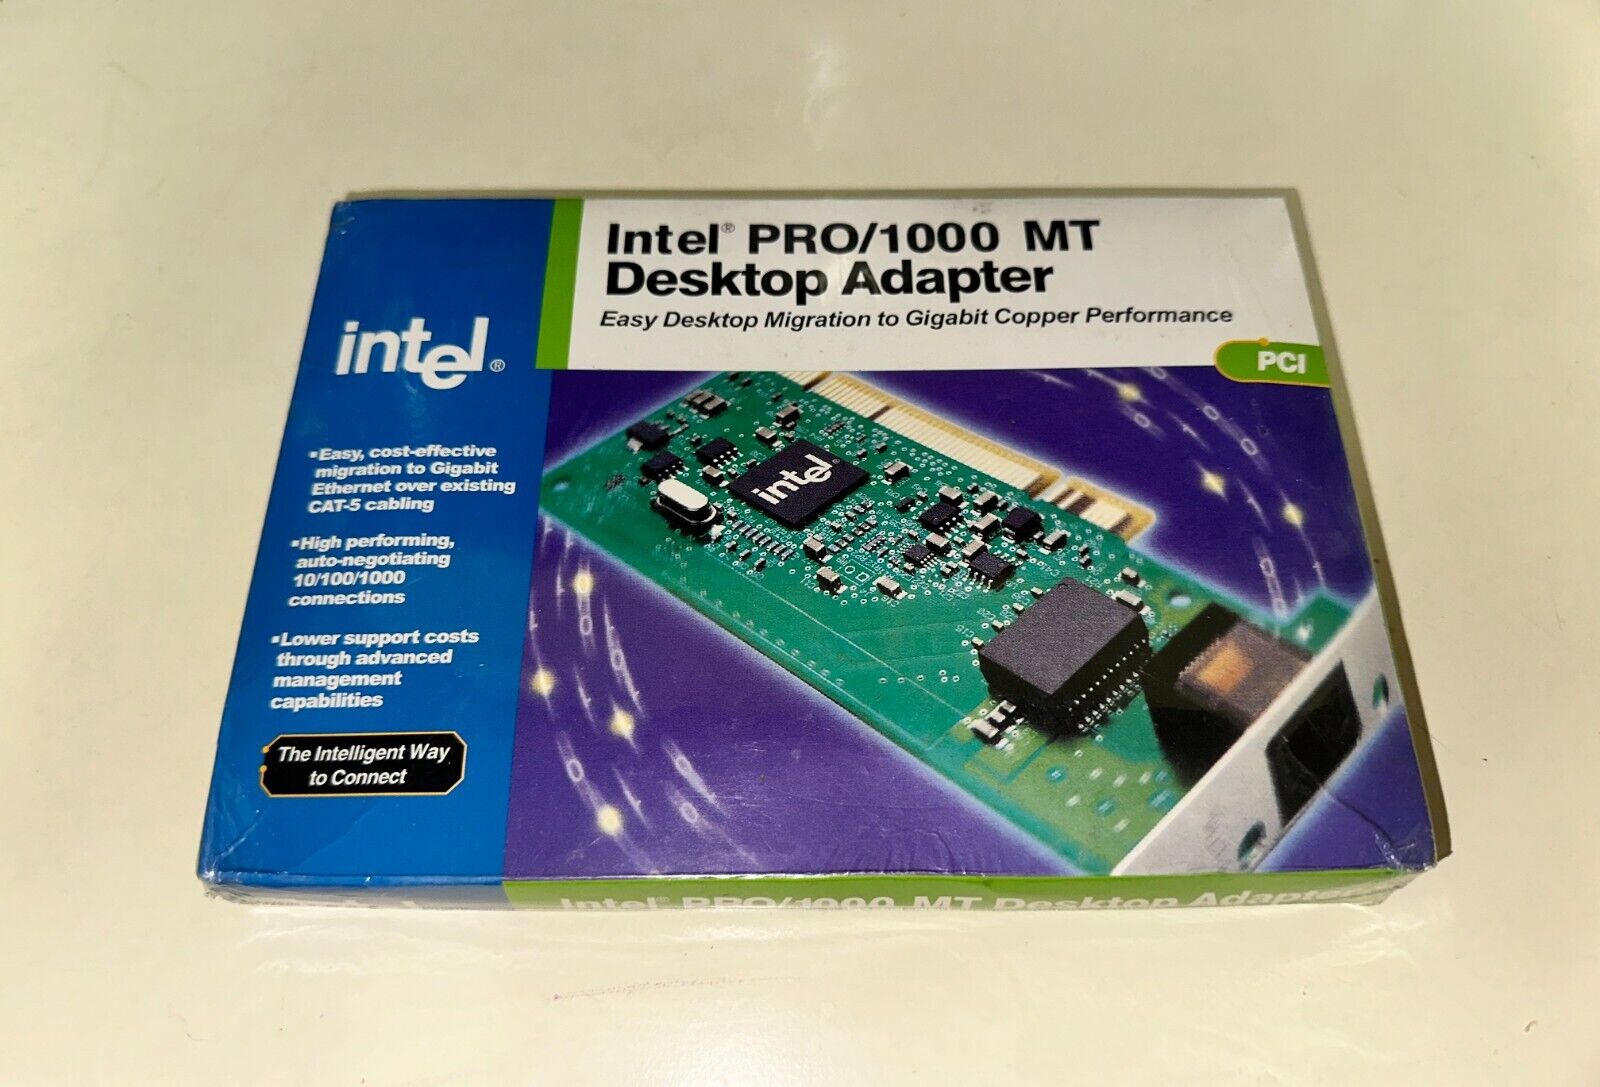 Intel Pro 1000 MT PWLA8390MT Desktop Adaptor